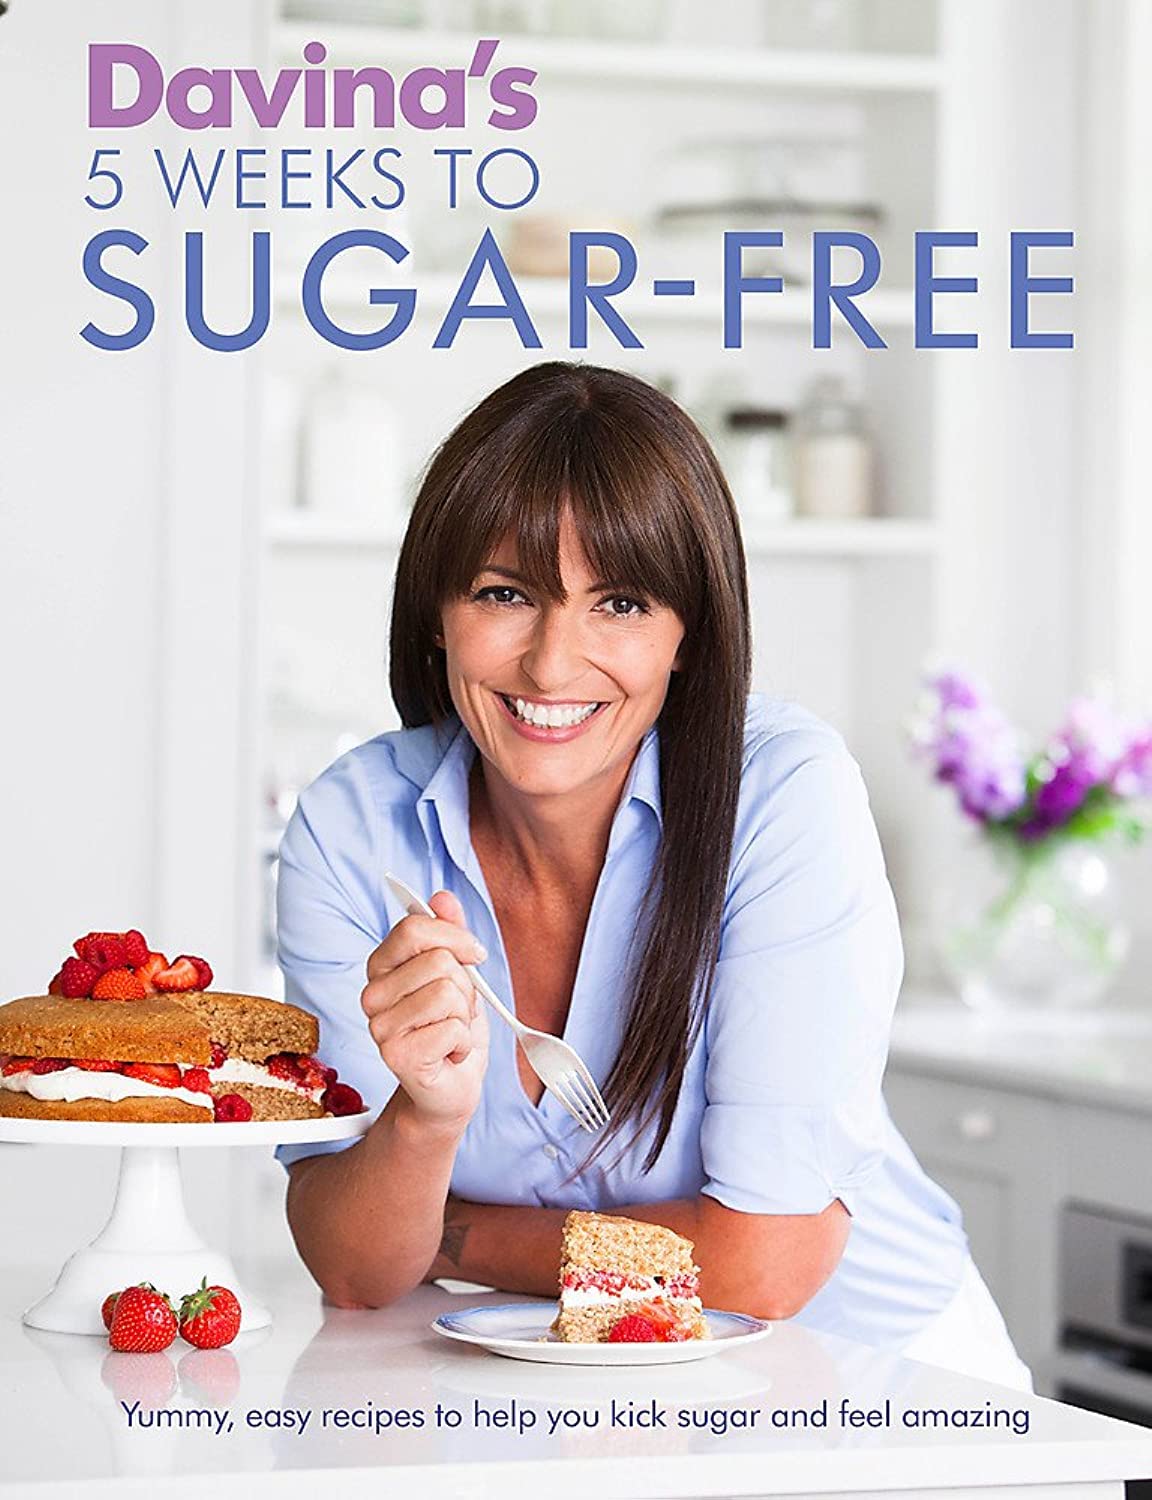 Davina's 5 Weeks to Sugar-Free: Paperback Recipe Book RRP 16.99 CLEARANCE XL 4.99